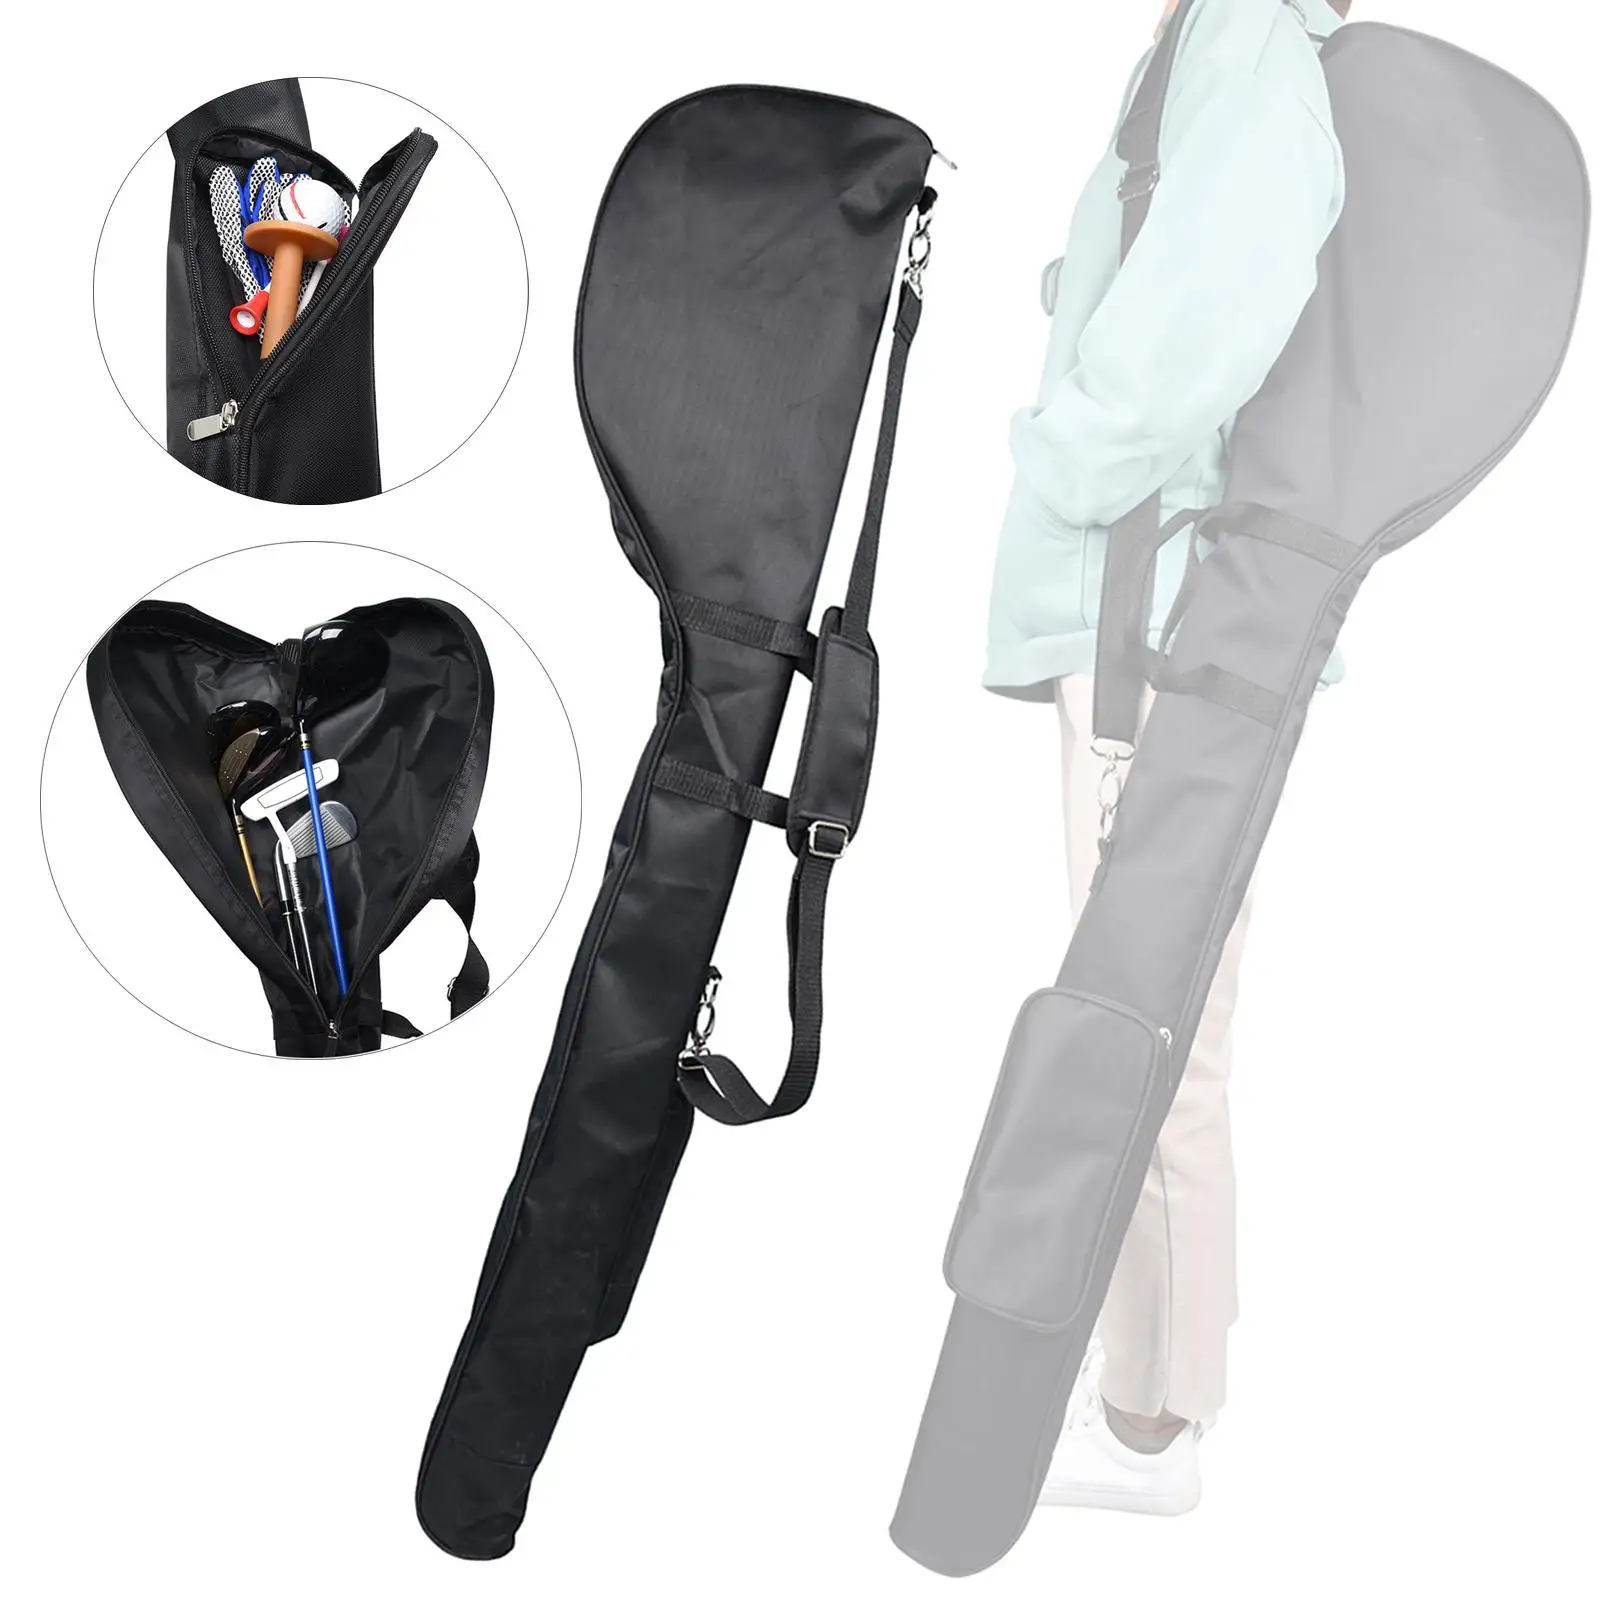 Golf Bag Clubs Case Lightweight Portable Travel Case Carry Bag Sunday Bag